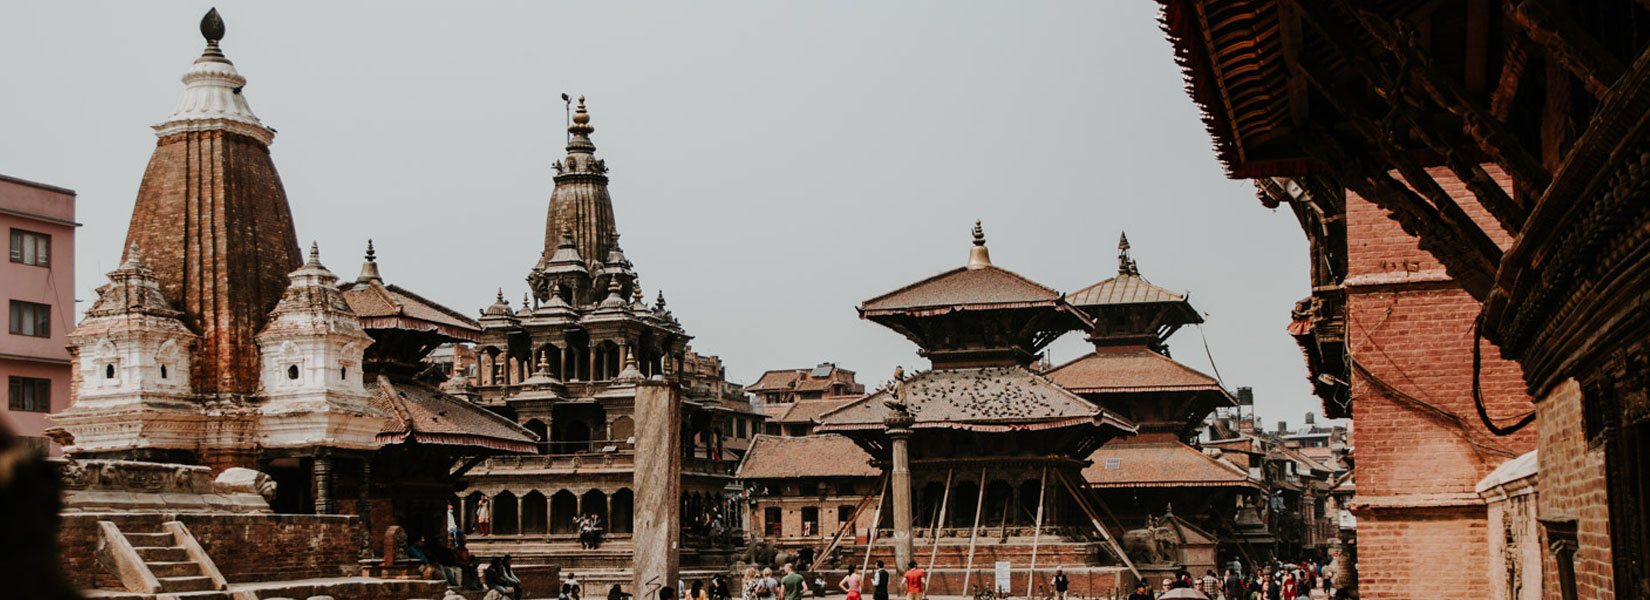 Patan City of Nepal